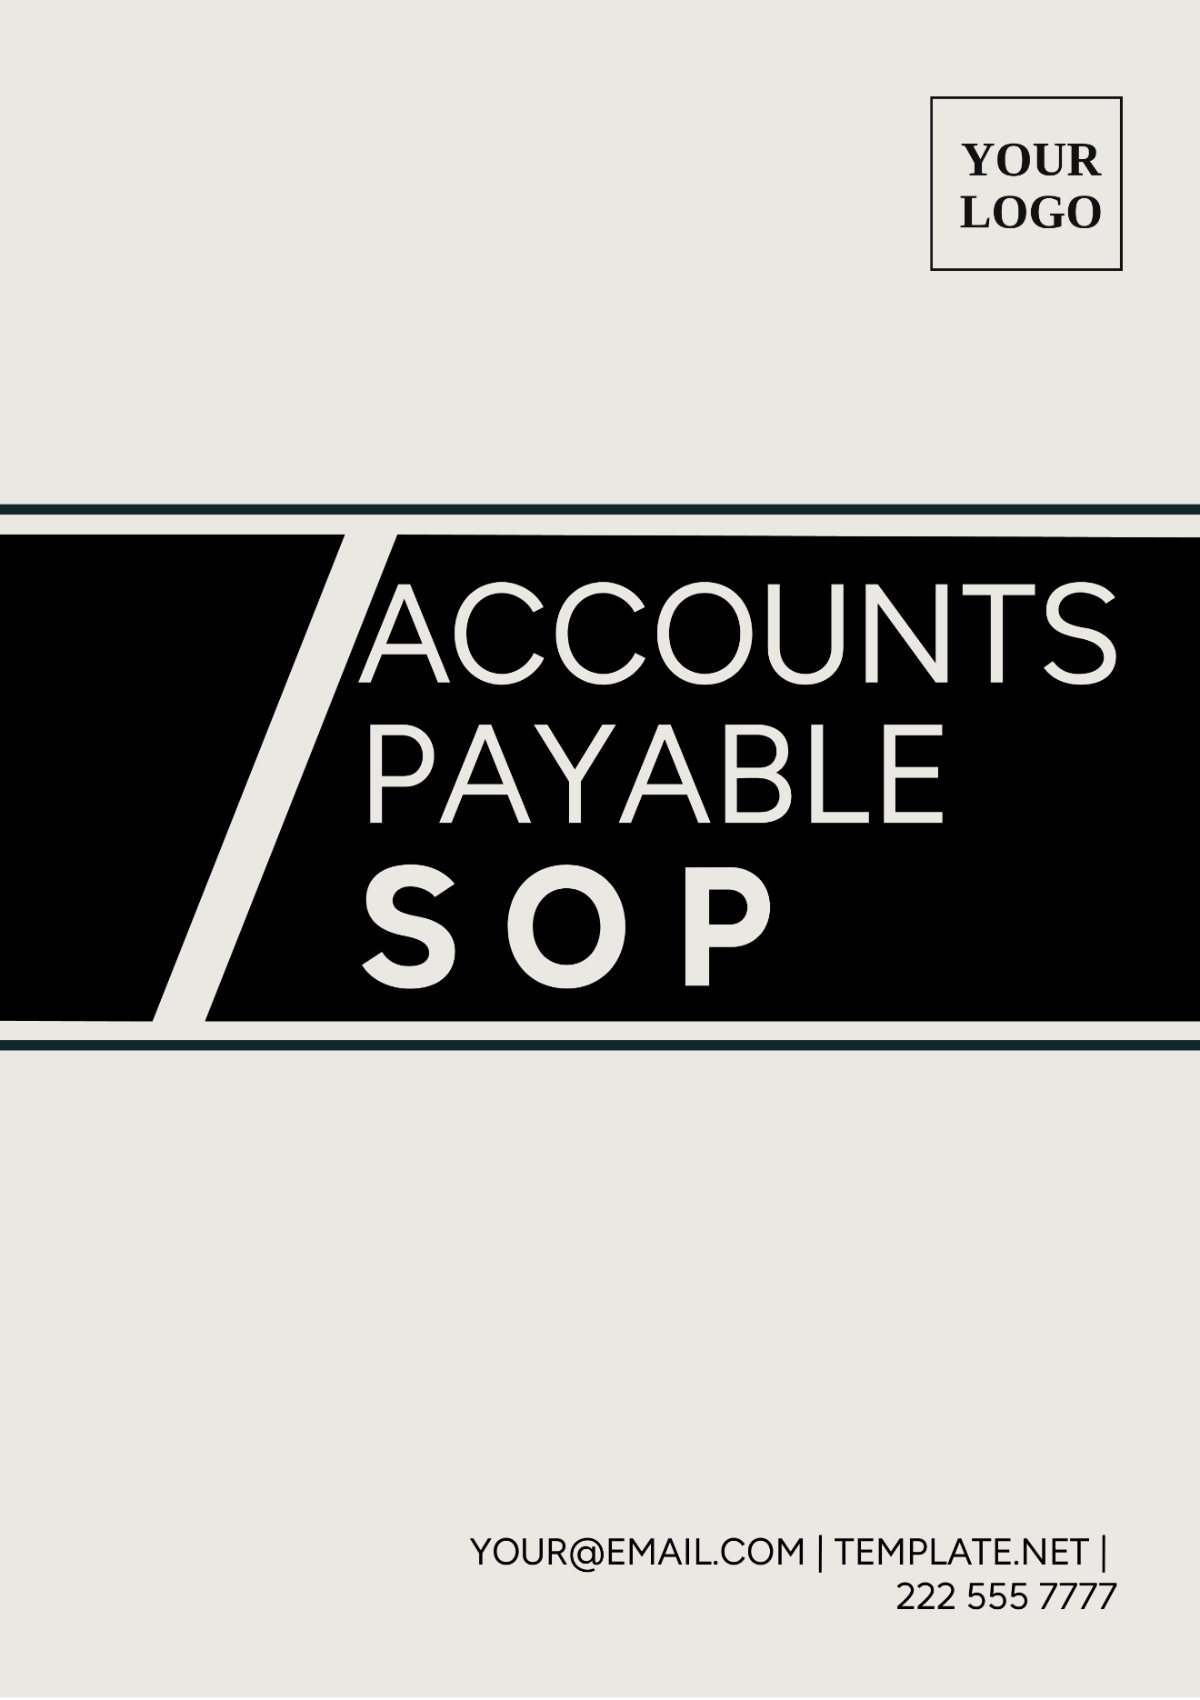 Accounts Payable SOP Template